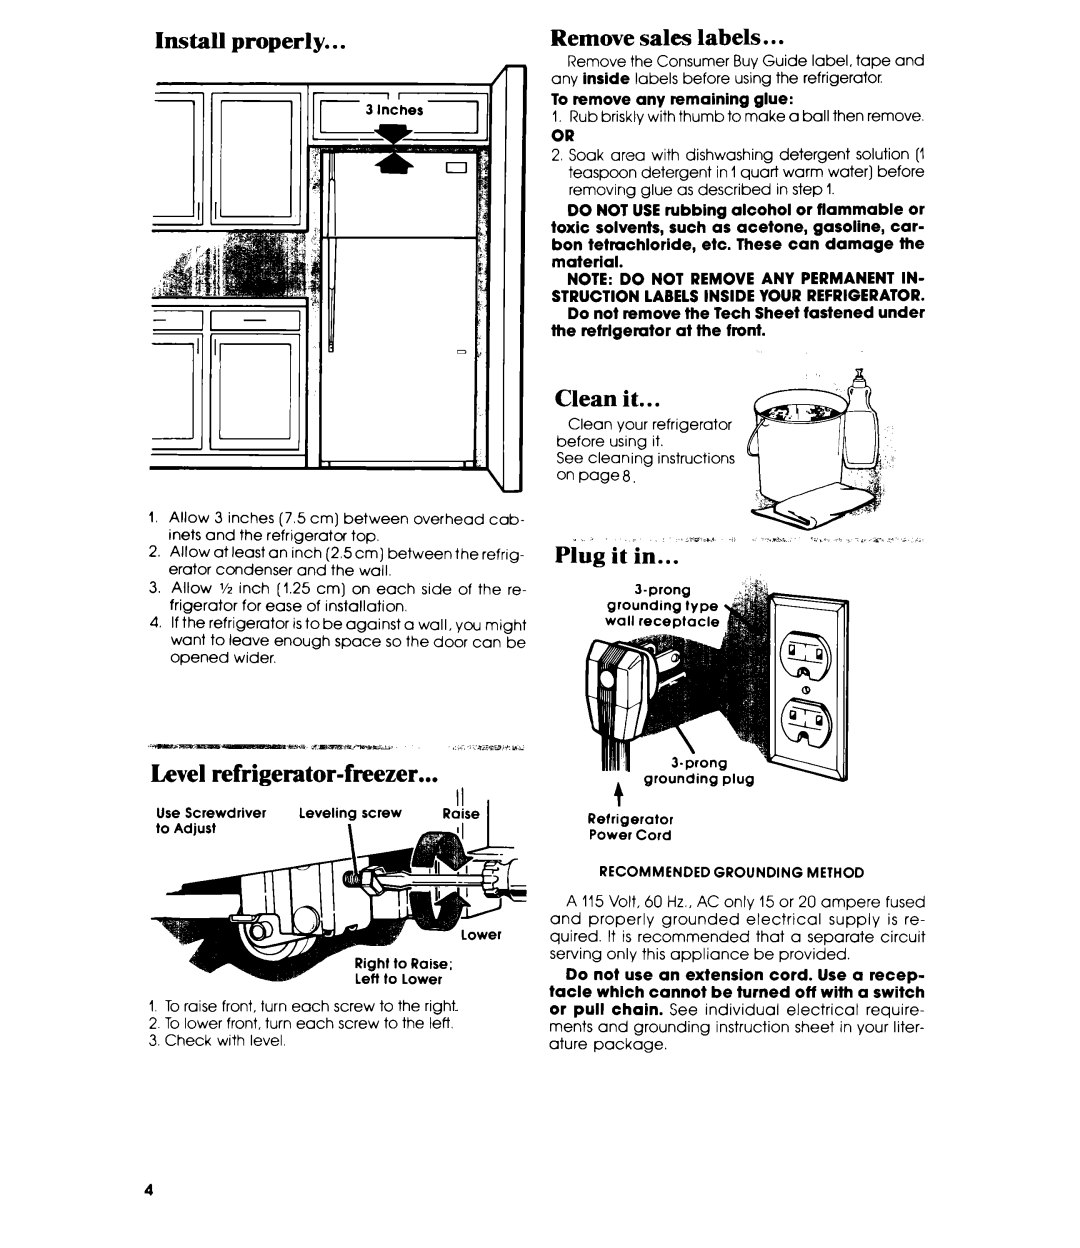 Whirlpool ETl6XK manual Install properly, Remove sales labels, Level refrigerator-freezer, Clean it, Plug it in 